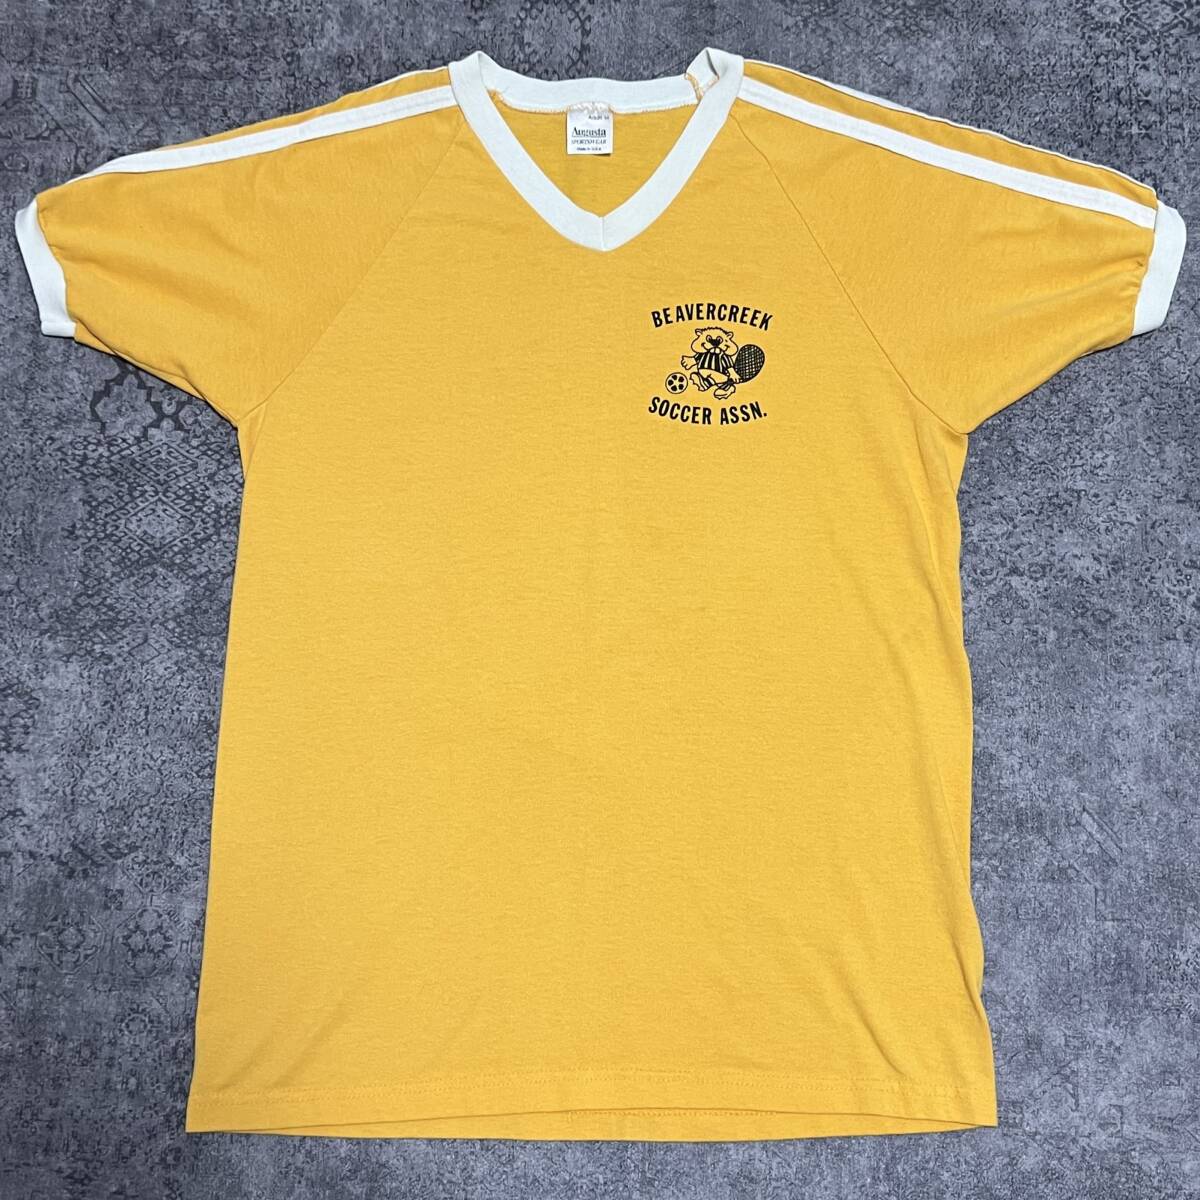 USA製 90s Augusta ゲームシャツ Tシャツ ユニフォーム イエロー 90年代 ヴィンテージ ビンテージ vintage_画像1